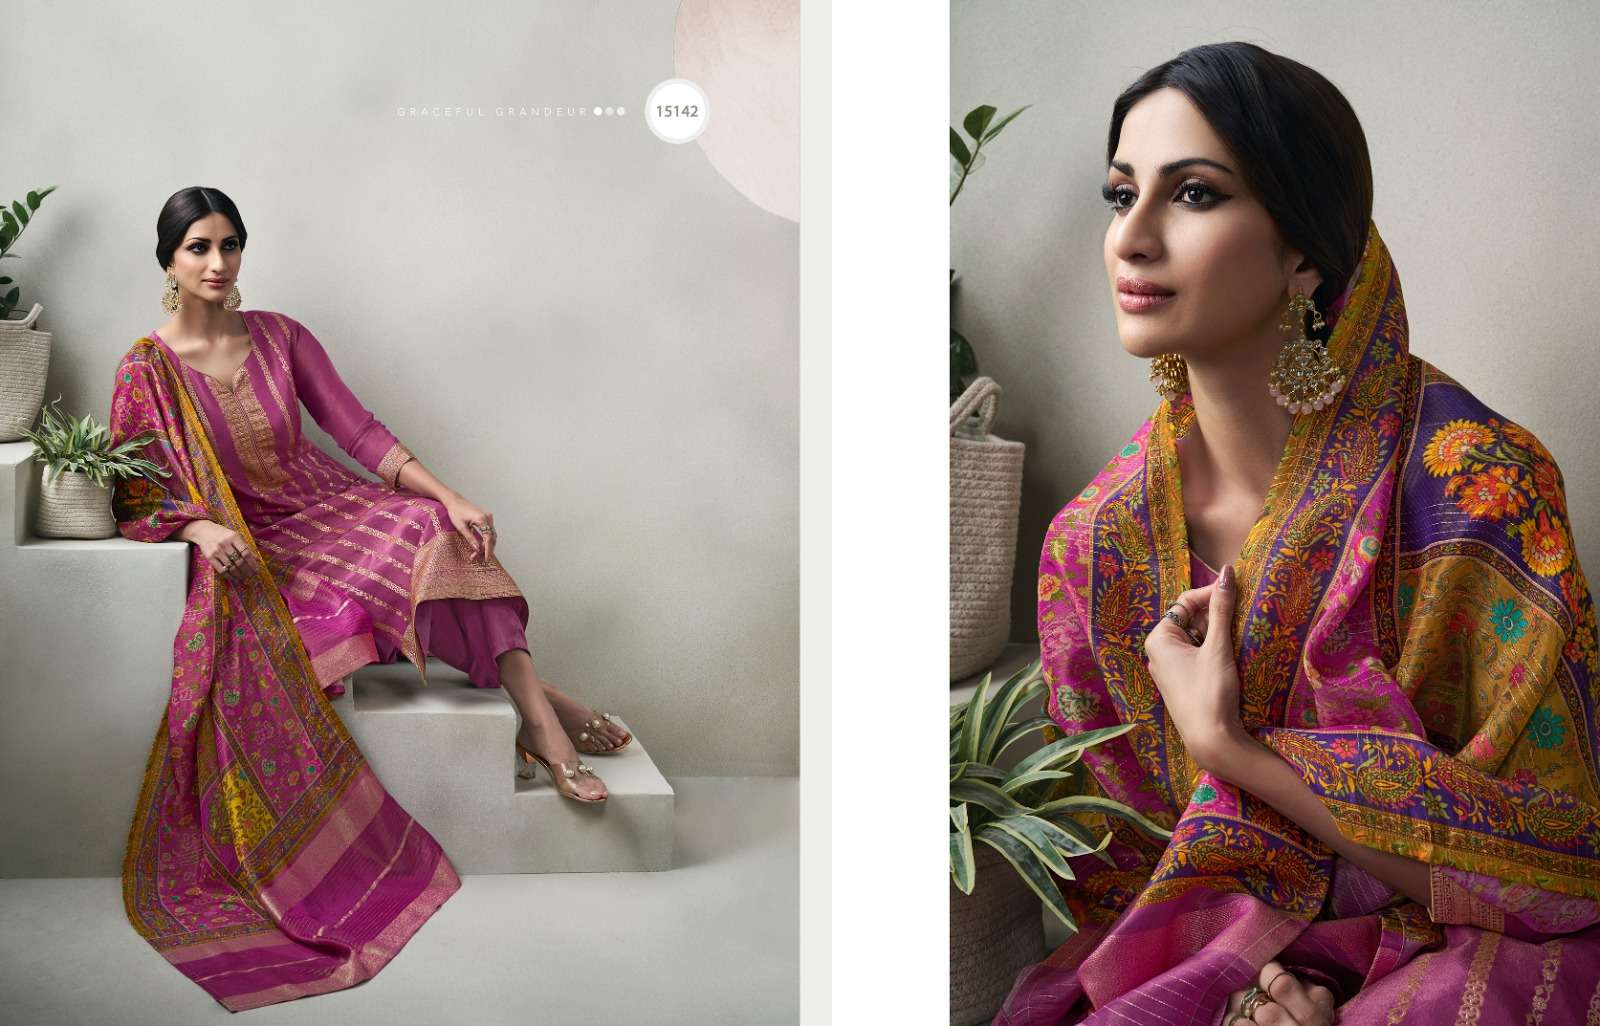 zisa charmy glory 15141-15144 series designer latest partywear salwar kameez wholesaler